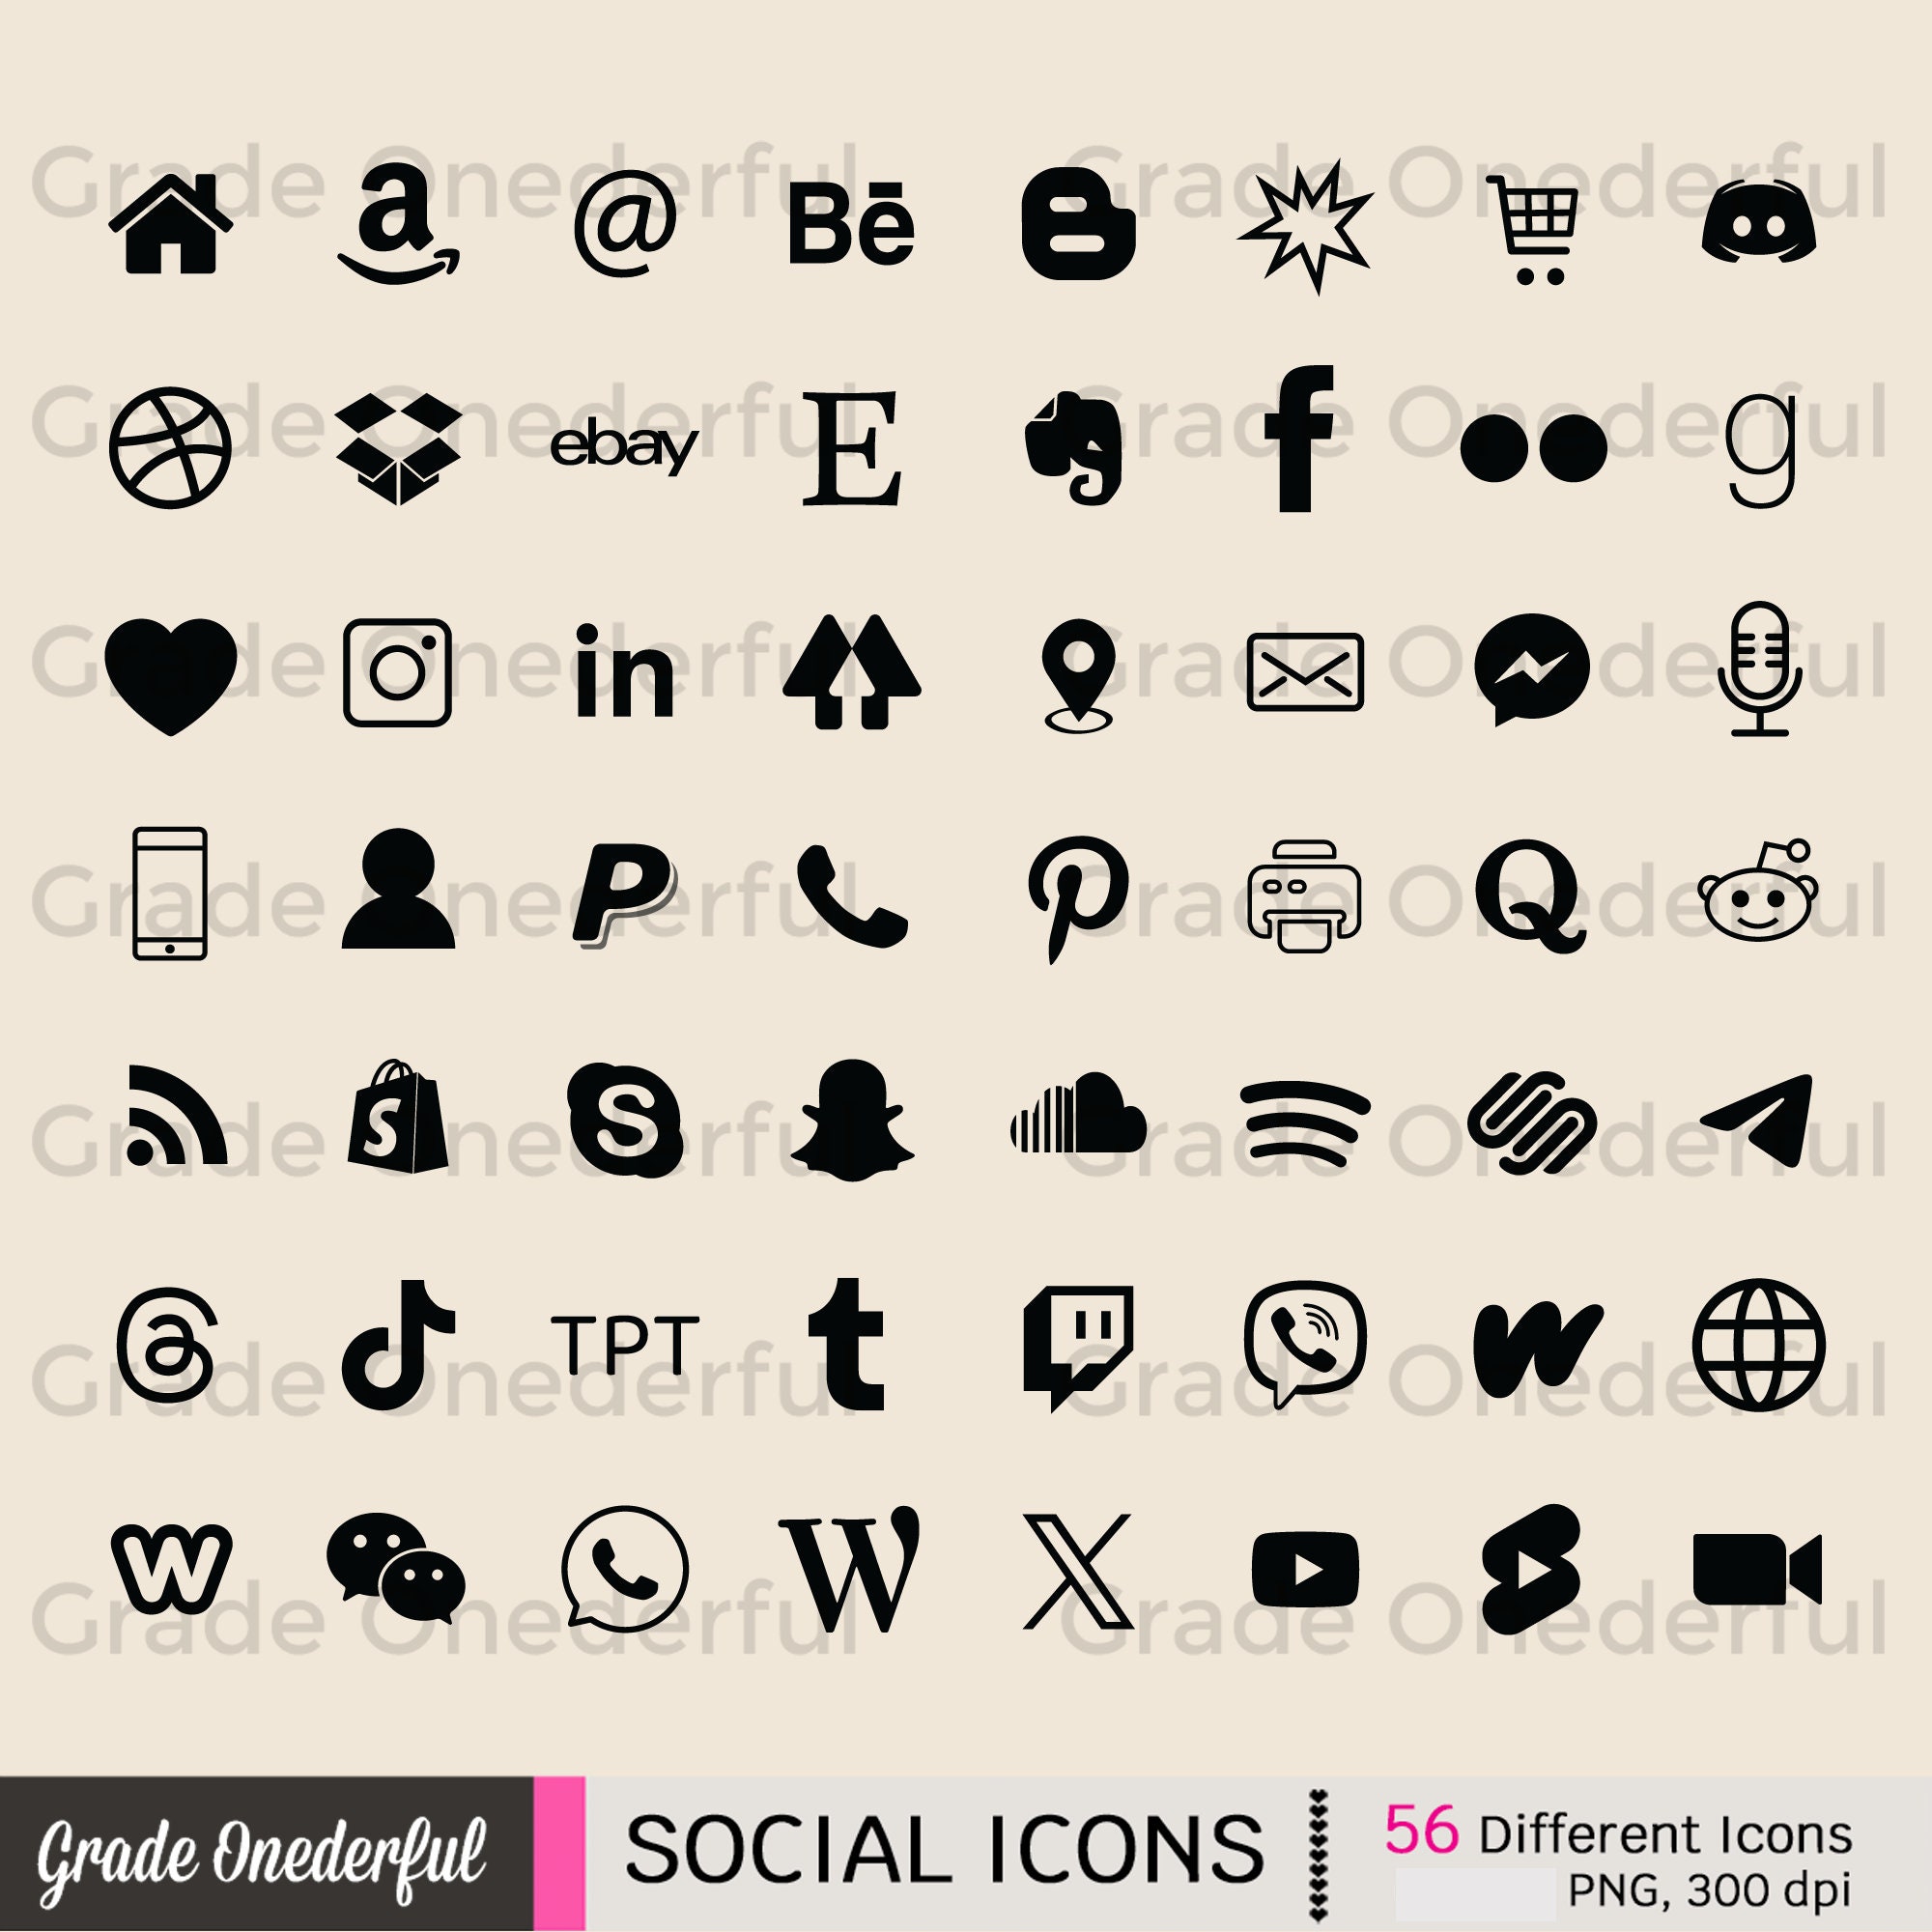 Rose Gold Social Media Icons, Social Media Buttons, Blog Icons, Website  Branding Blog Buttons Snapchat Instagram Paypal  Whatsapp -  Denmark